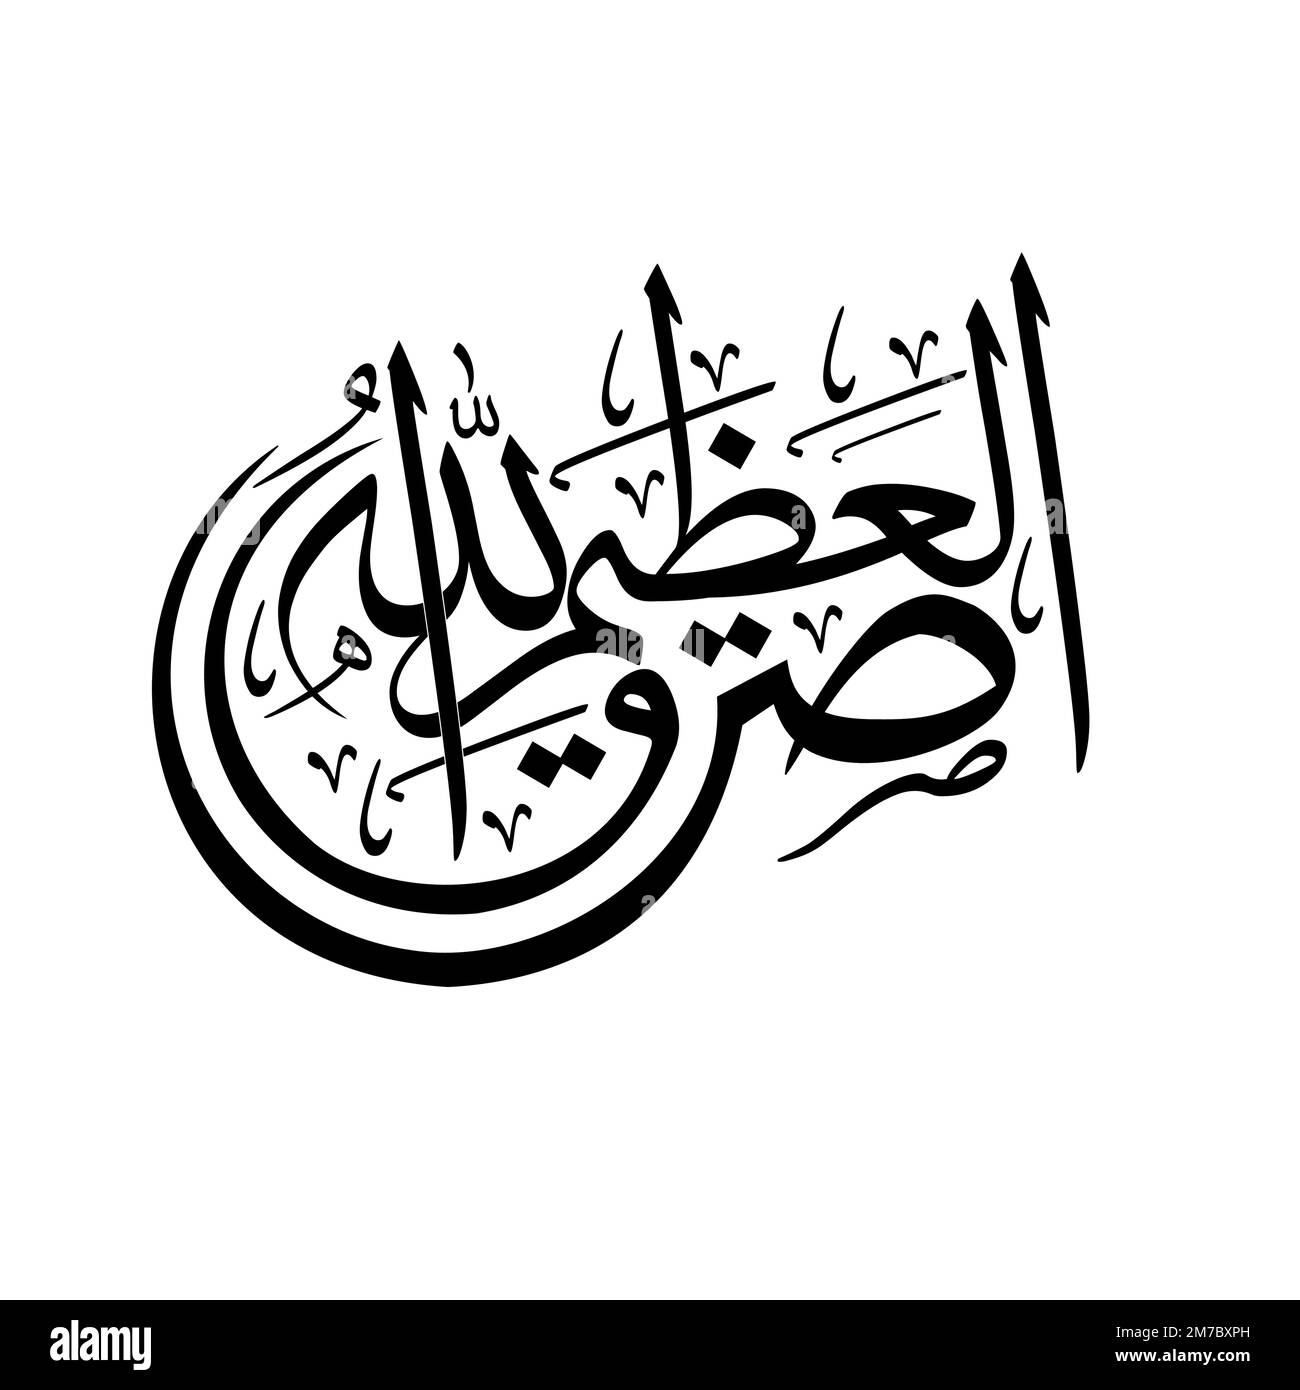 Sadaqallahul Azim will be english translation Allah The Immense said the truth. Beautiful arabic calligraphy vector illustration design Stock Vector